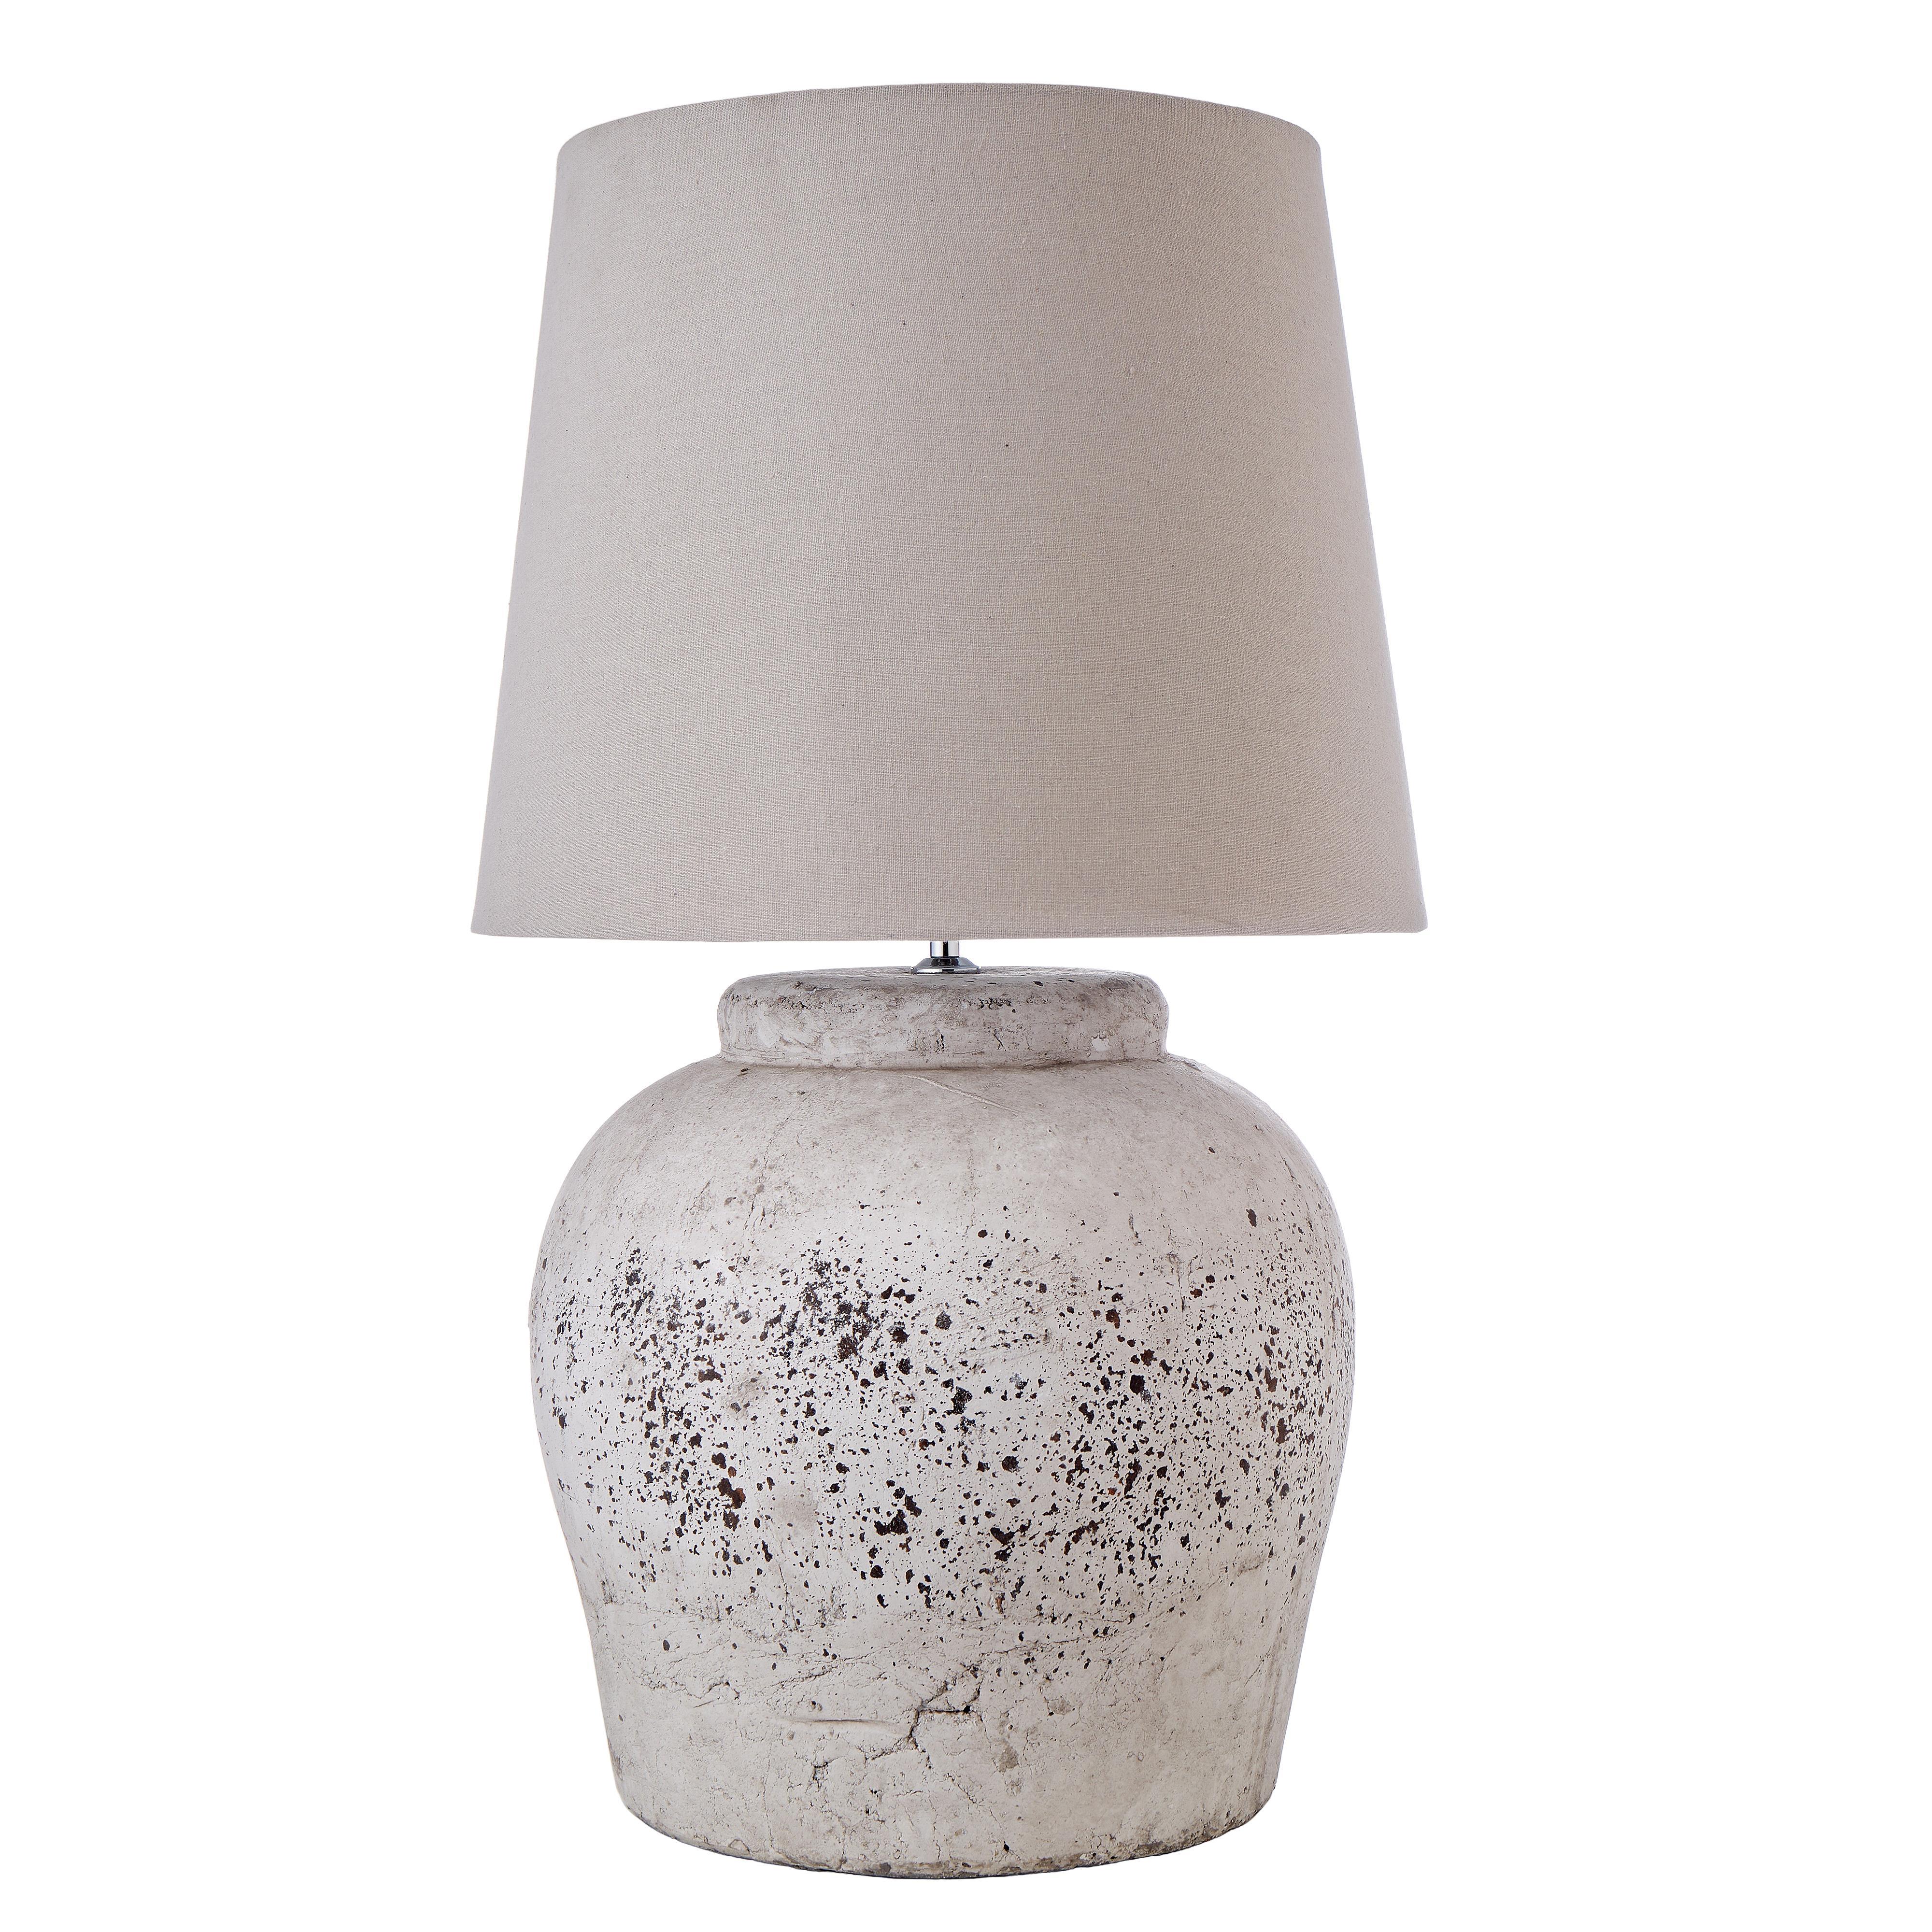 Amalfi Rustic Ceramic Table Lamp Bedside Light Desk Reading Lamp Decor Grey 45x45x77cm